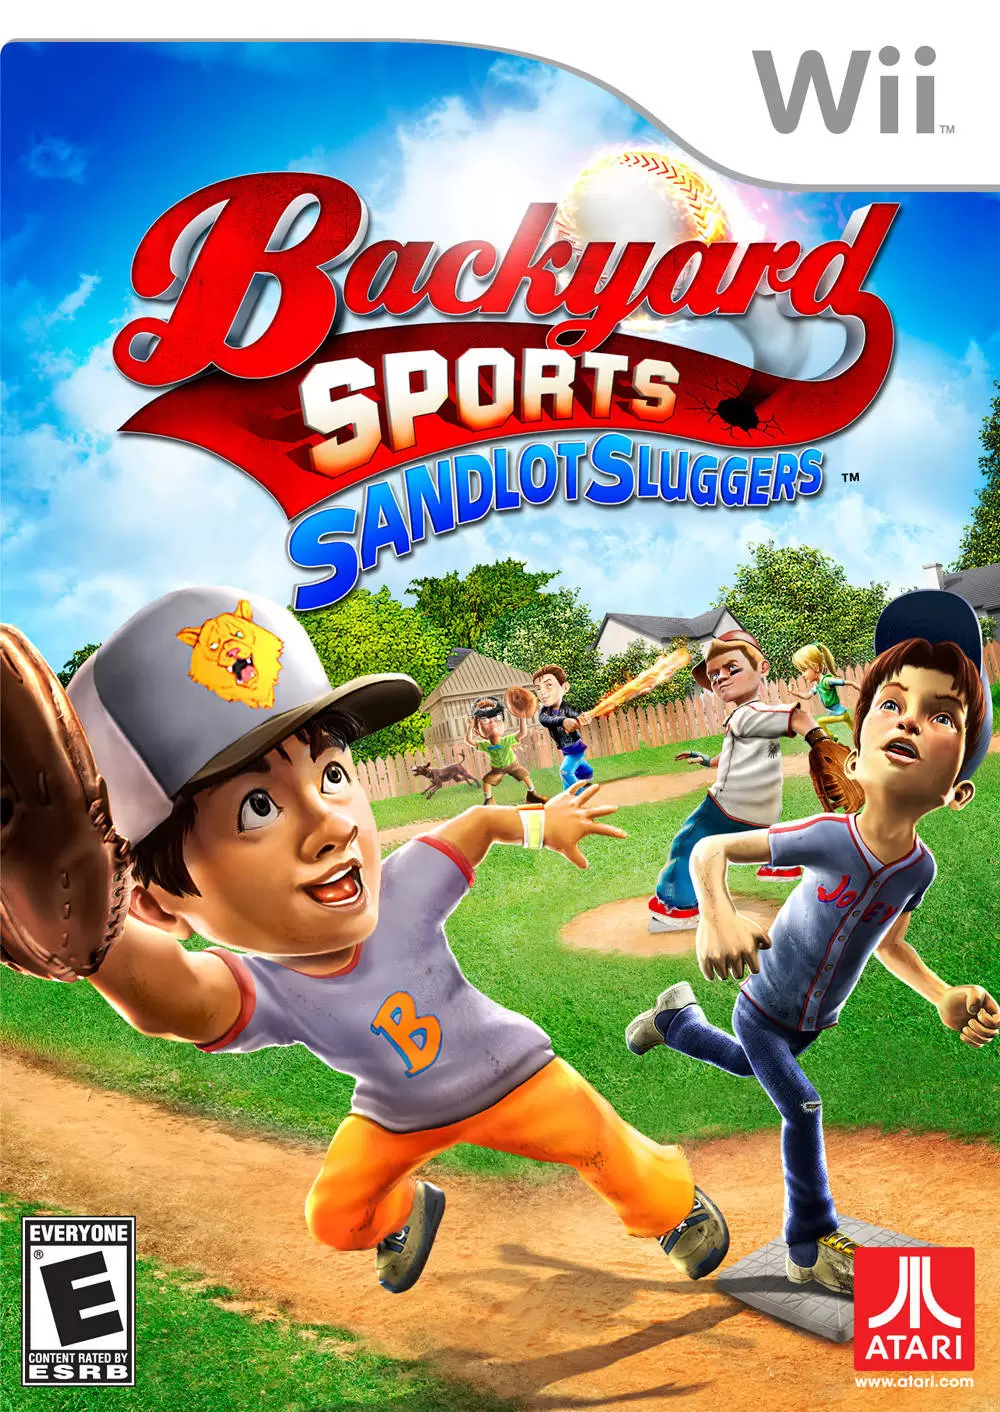 Nintendo Wii Games - Backyard Sports: Sandlot Sluggers